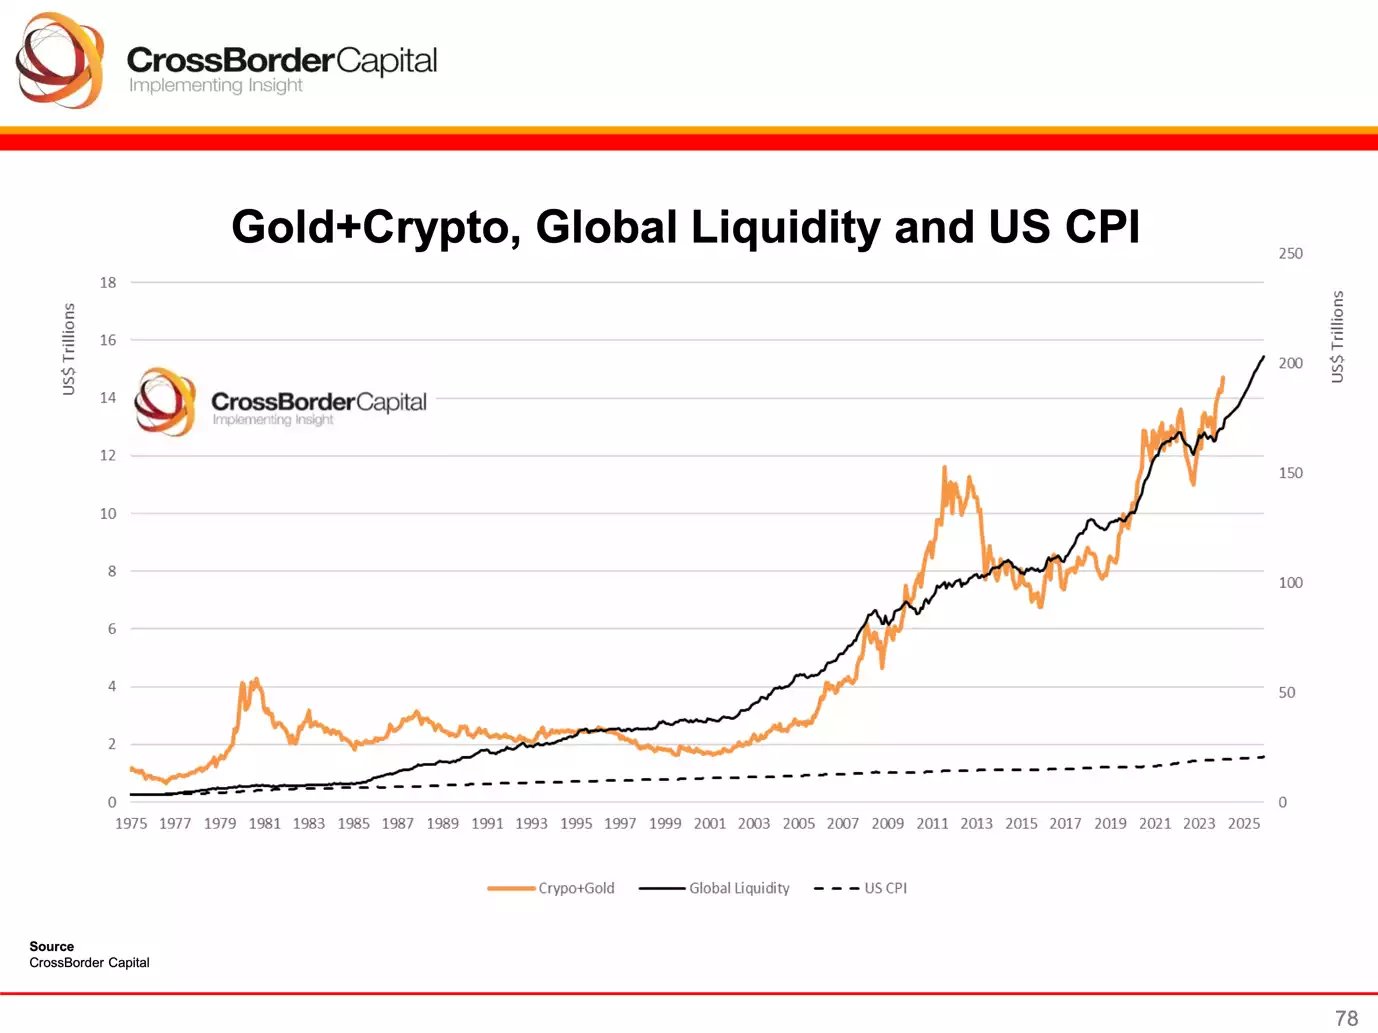 Gold+Crypto, Global Liquidity and U.S. CPI